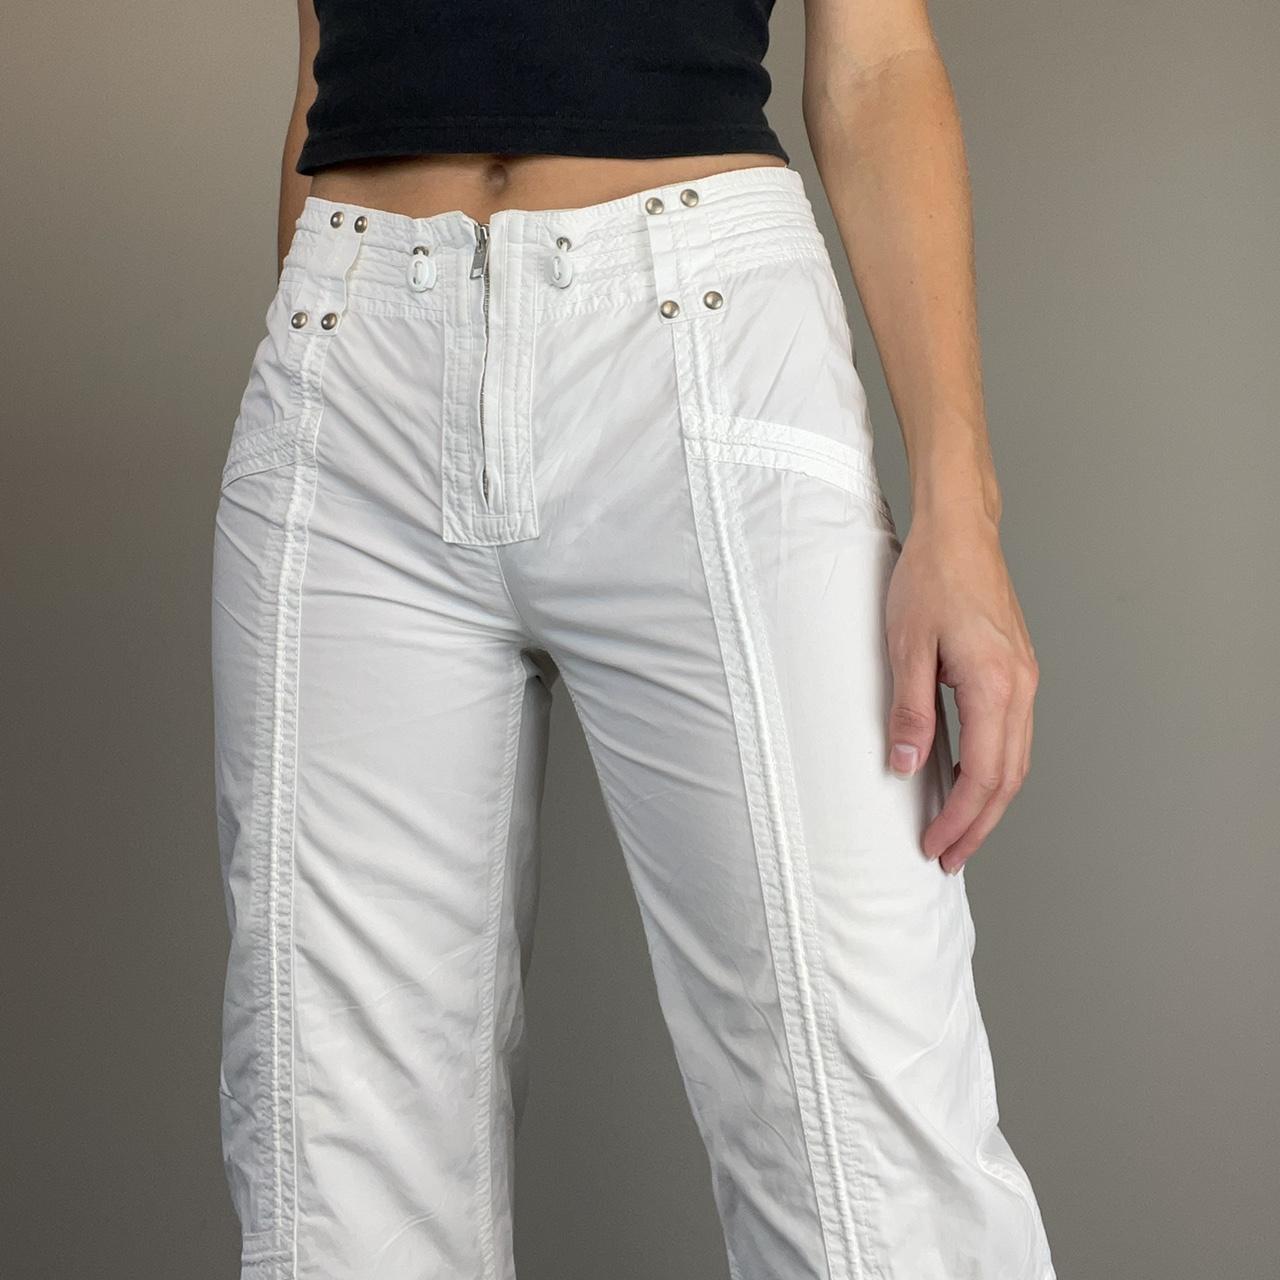 Next Women's White Trousers